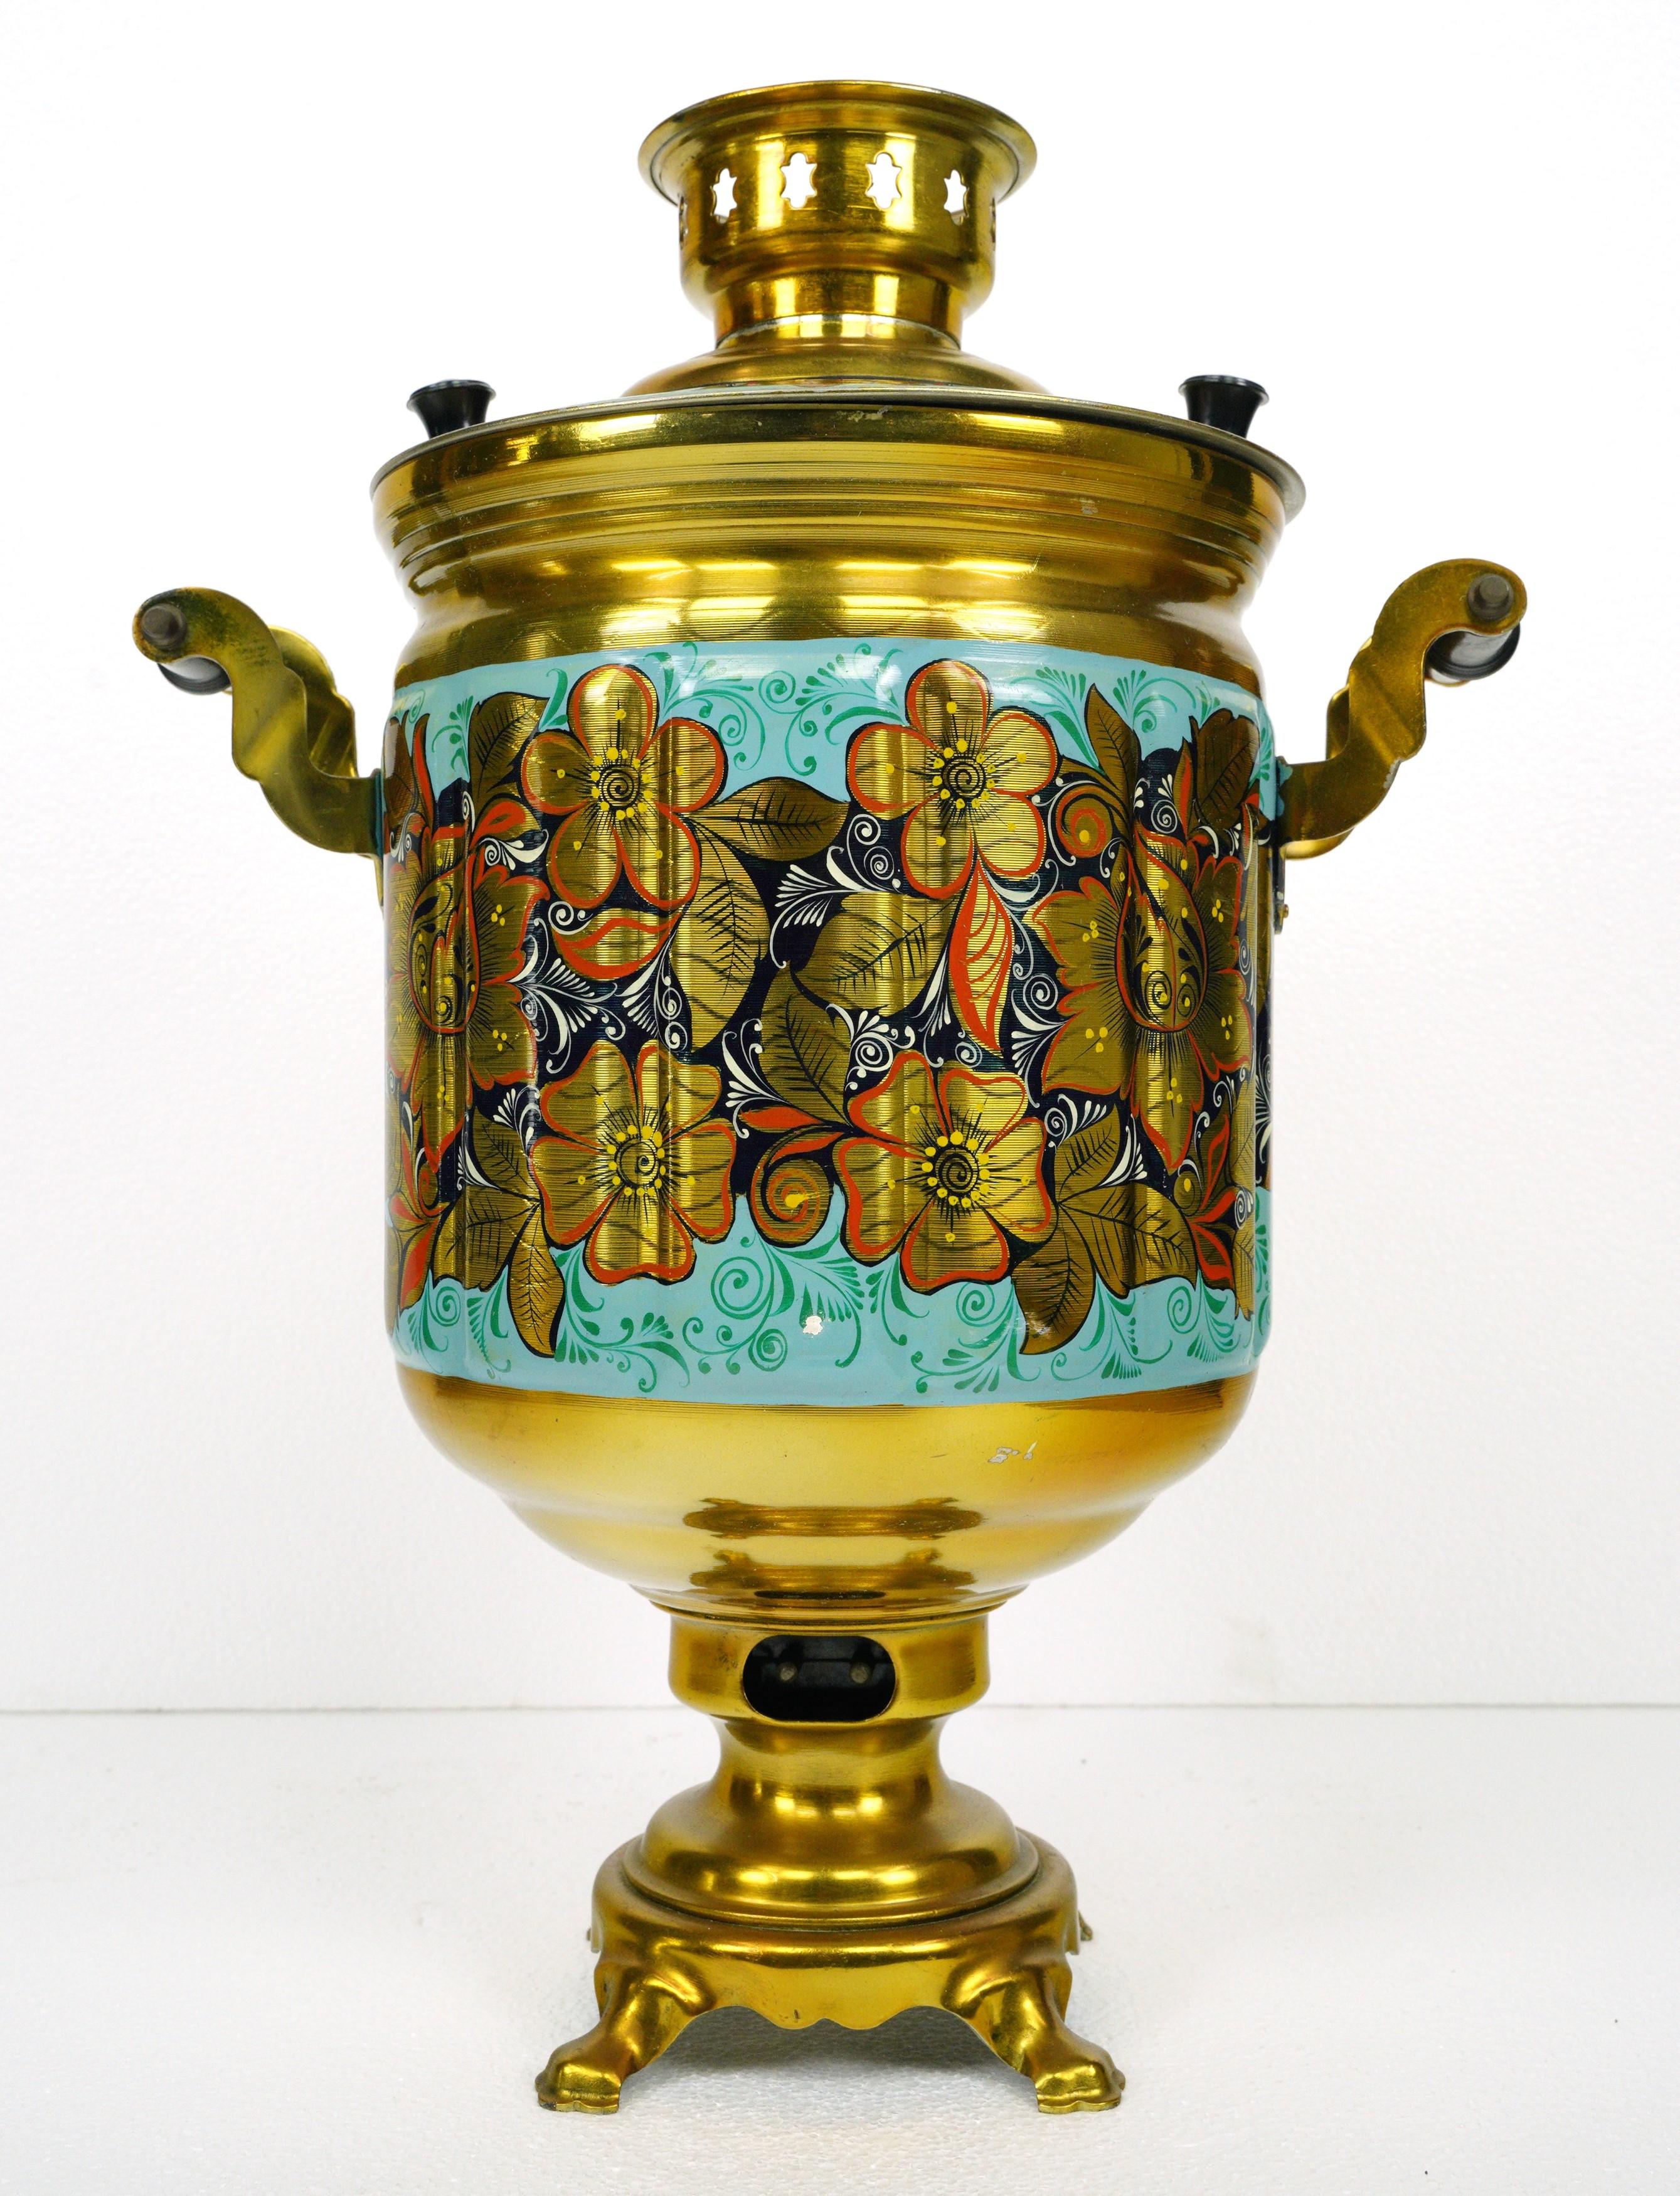 Soviet Russian Floral Brass Electric Samovar Teapot Antique For Sale 3